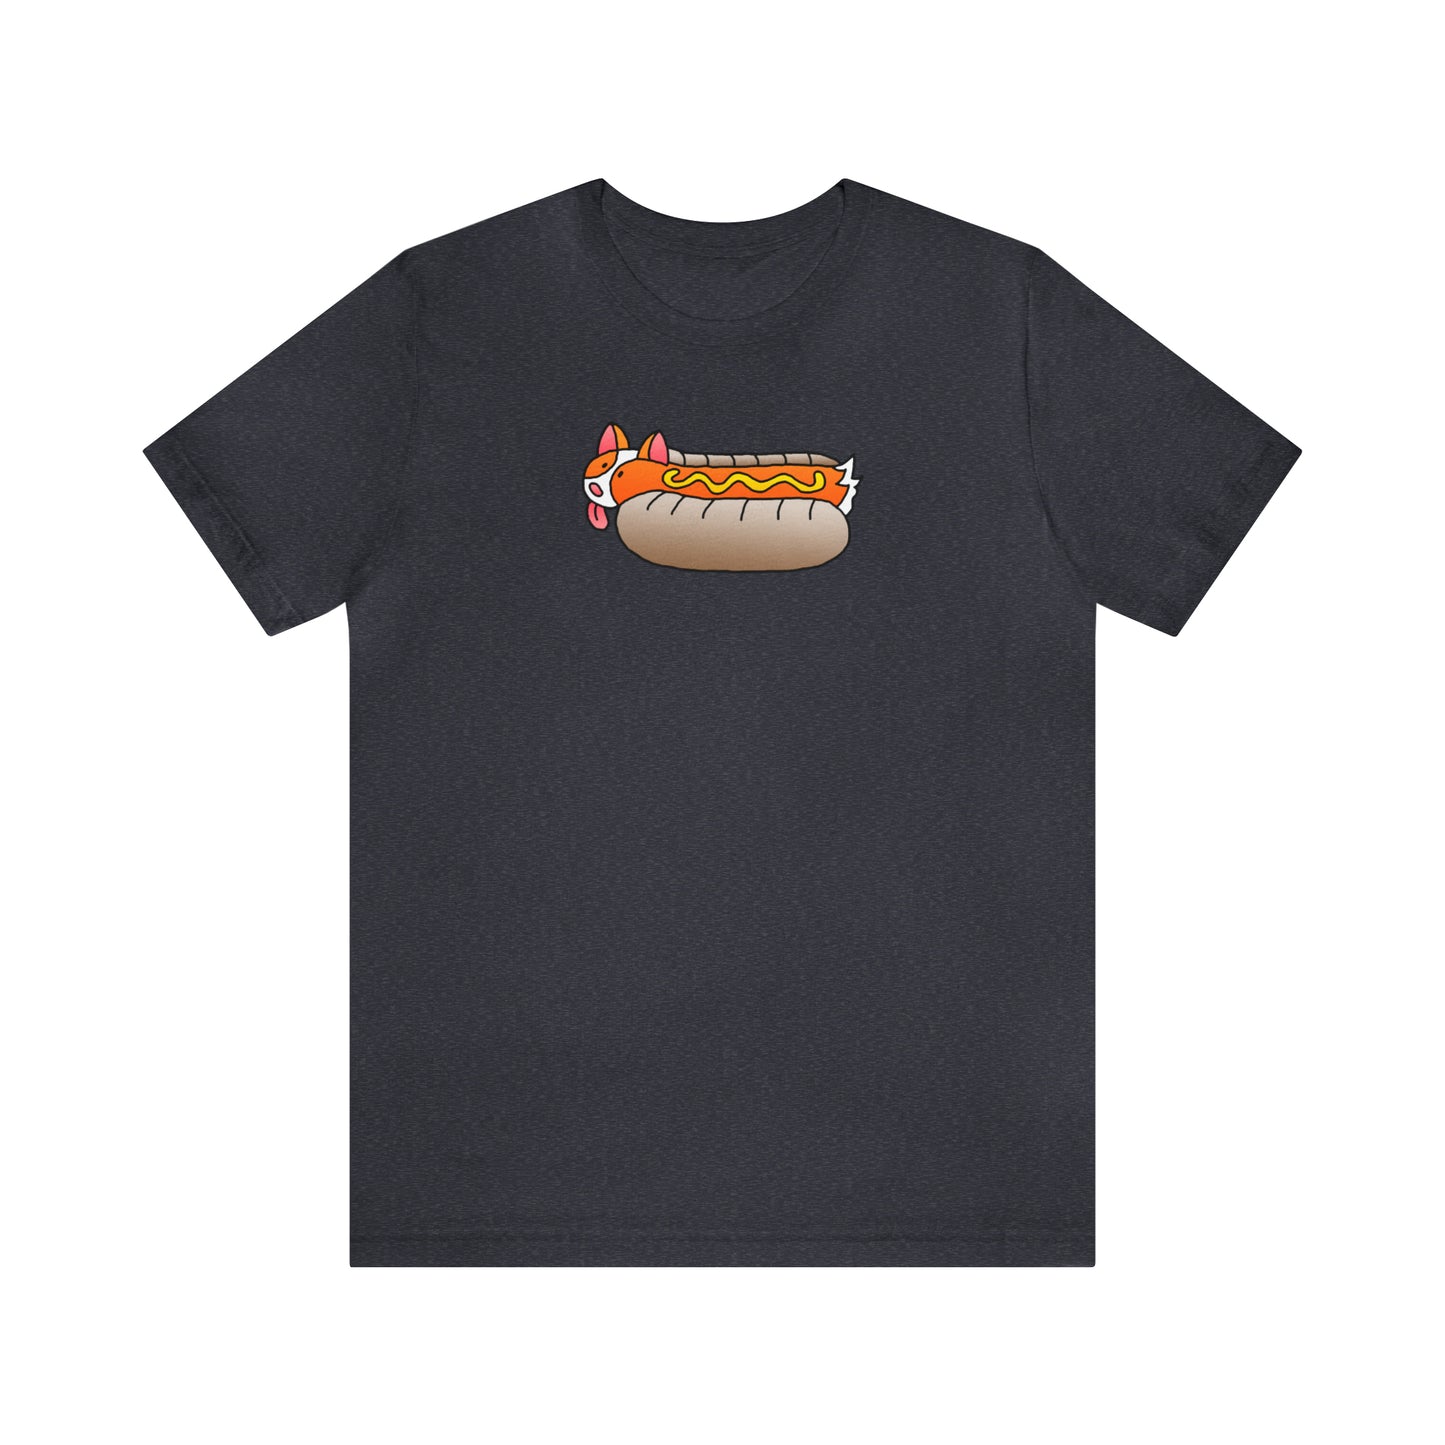 Navy Front ShoBeaRo logo unisex t-shirt short sleeve men women shirt corgi hot dog I saved a life